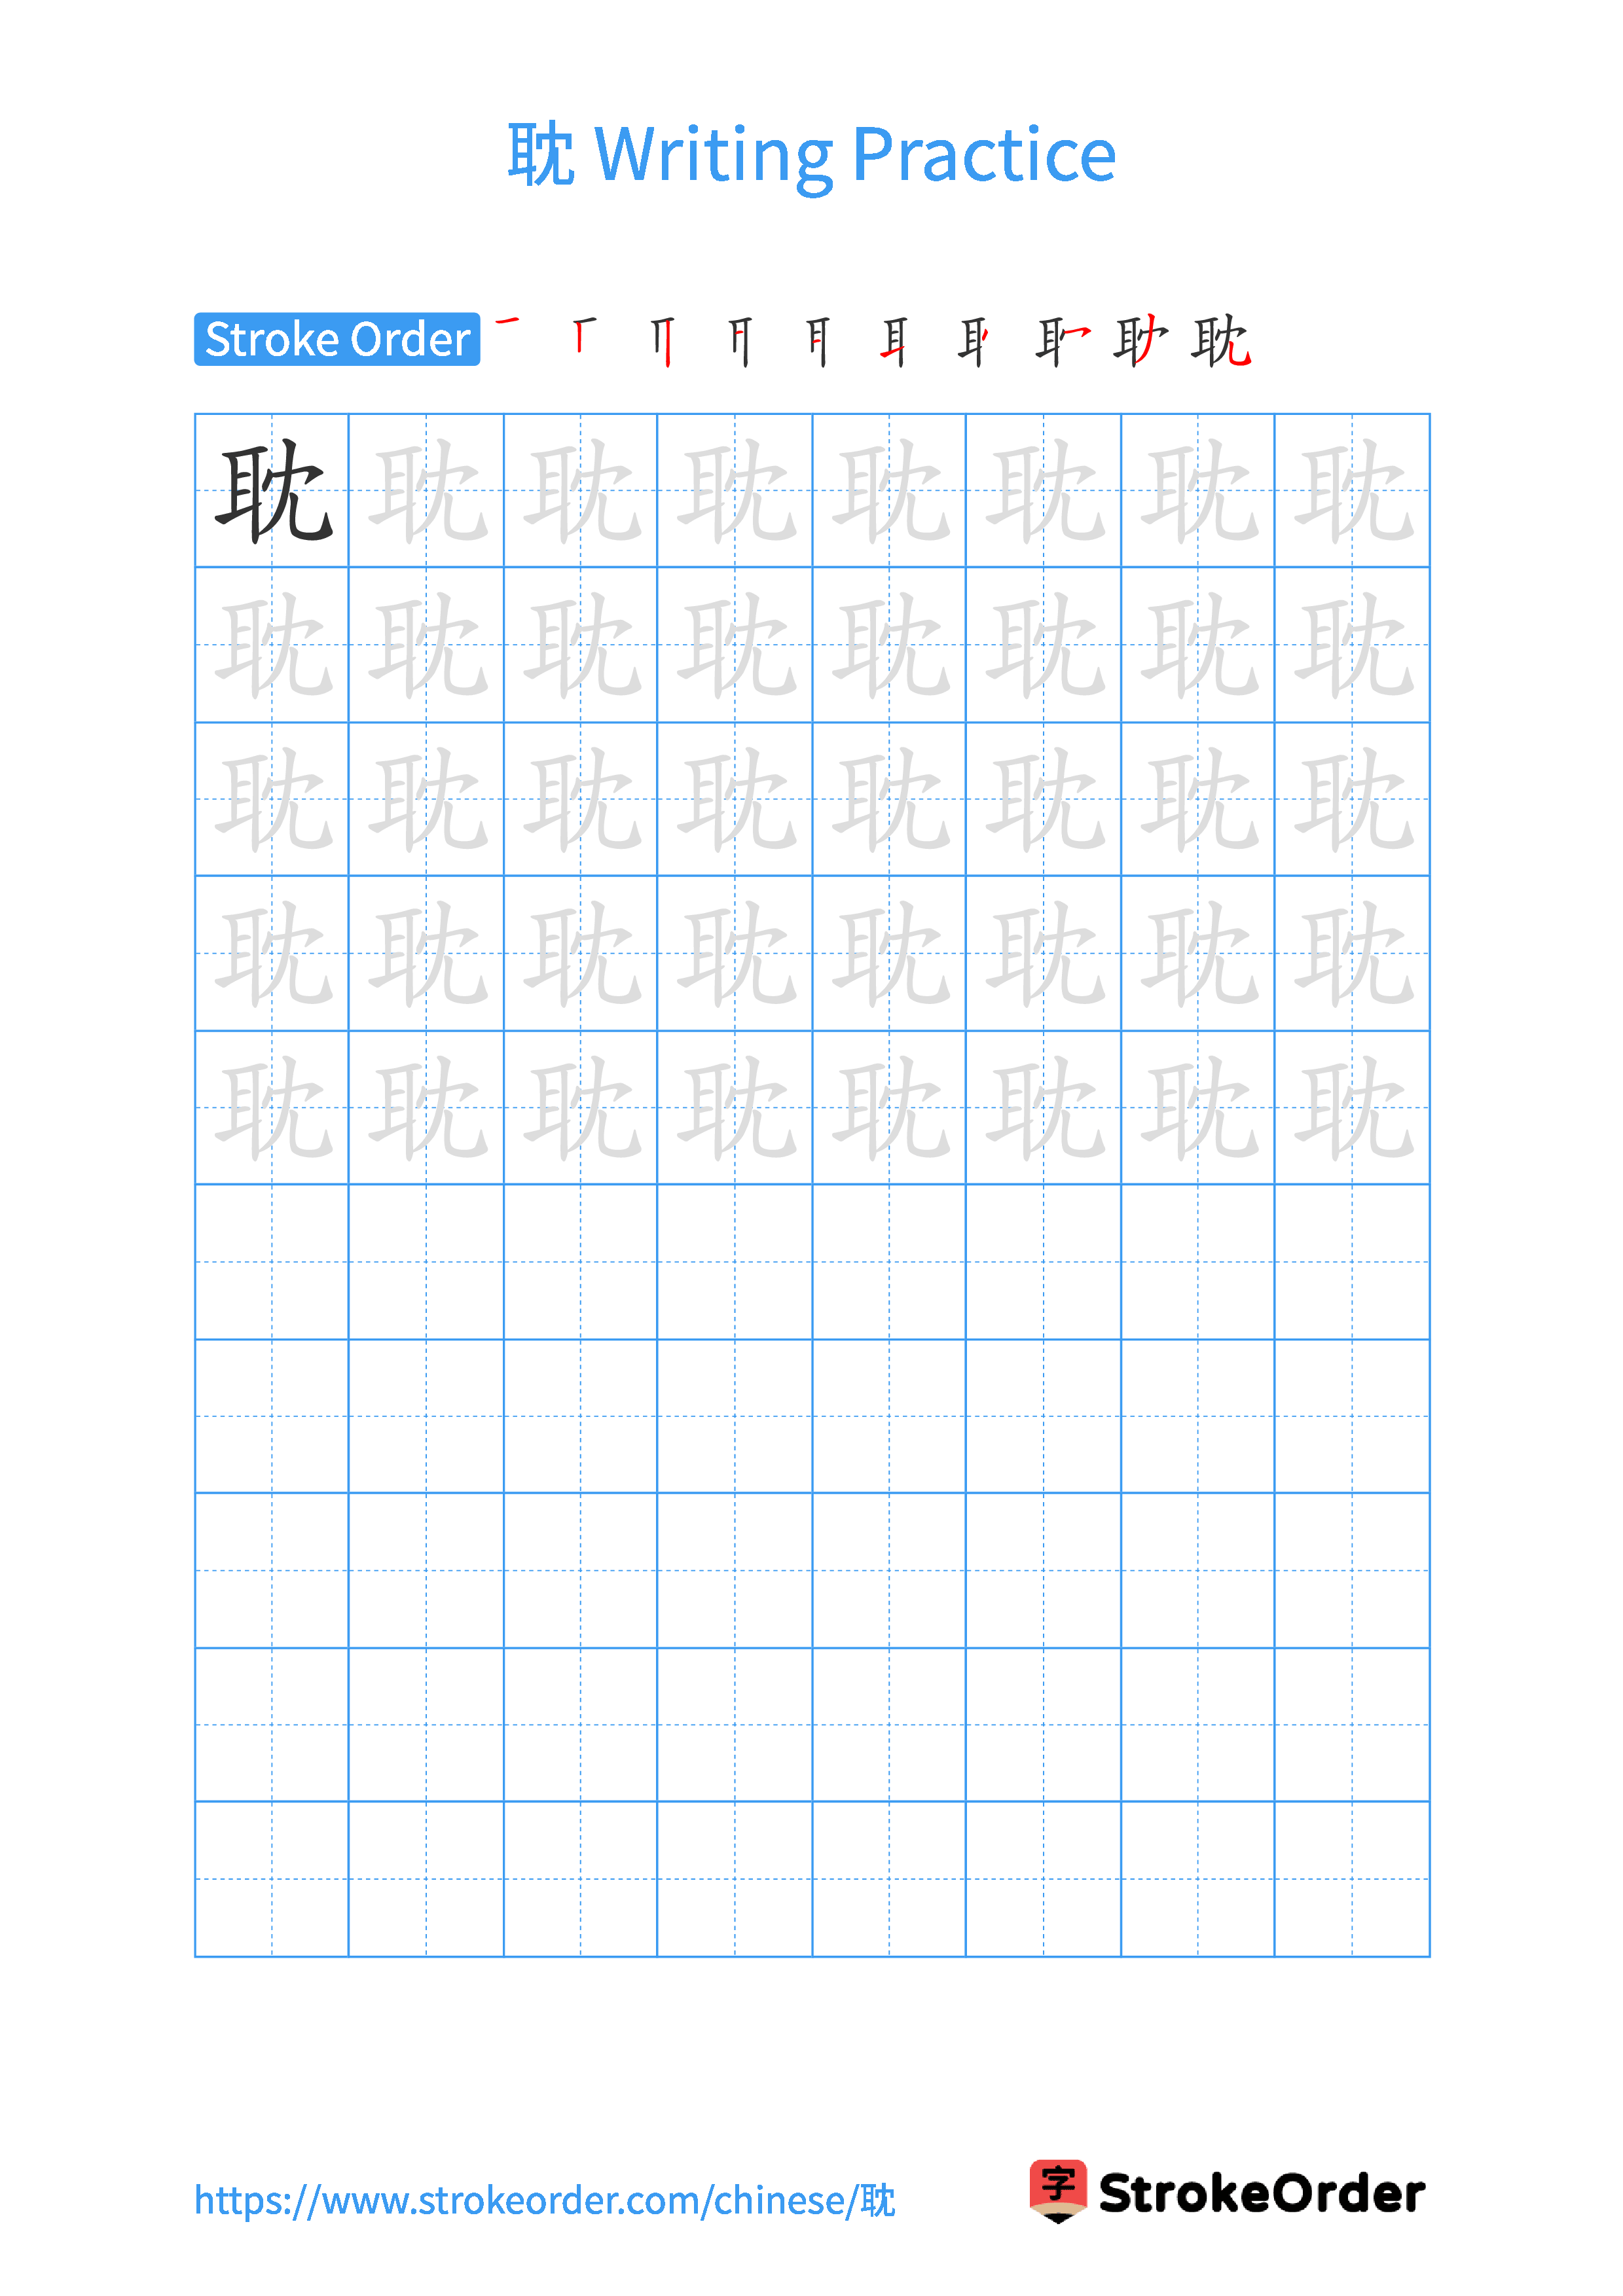 Printable Handwriting Practice Worksheet of the Chinese character 耽 in Portrait Orientation (Tian Zi Ge)